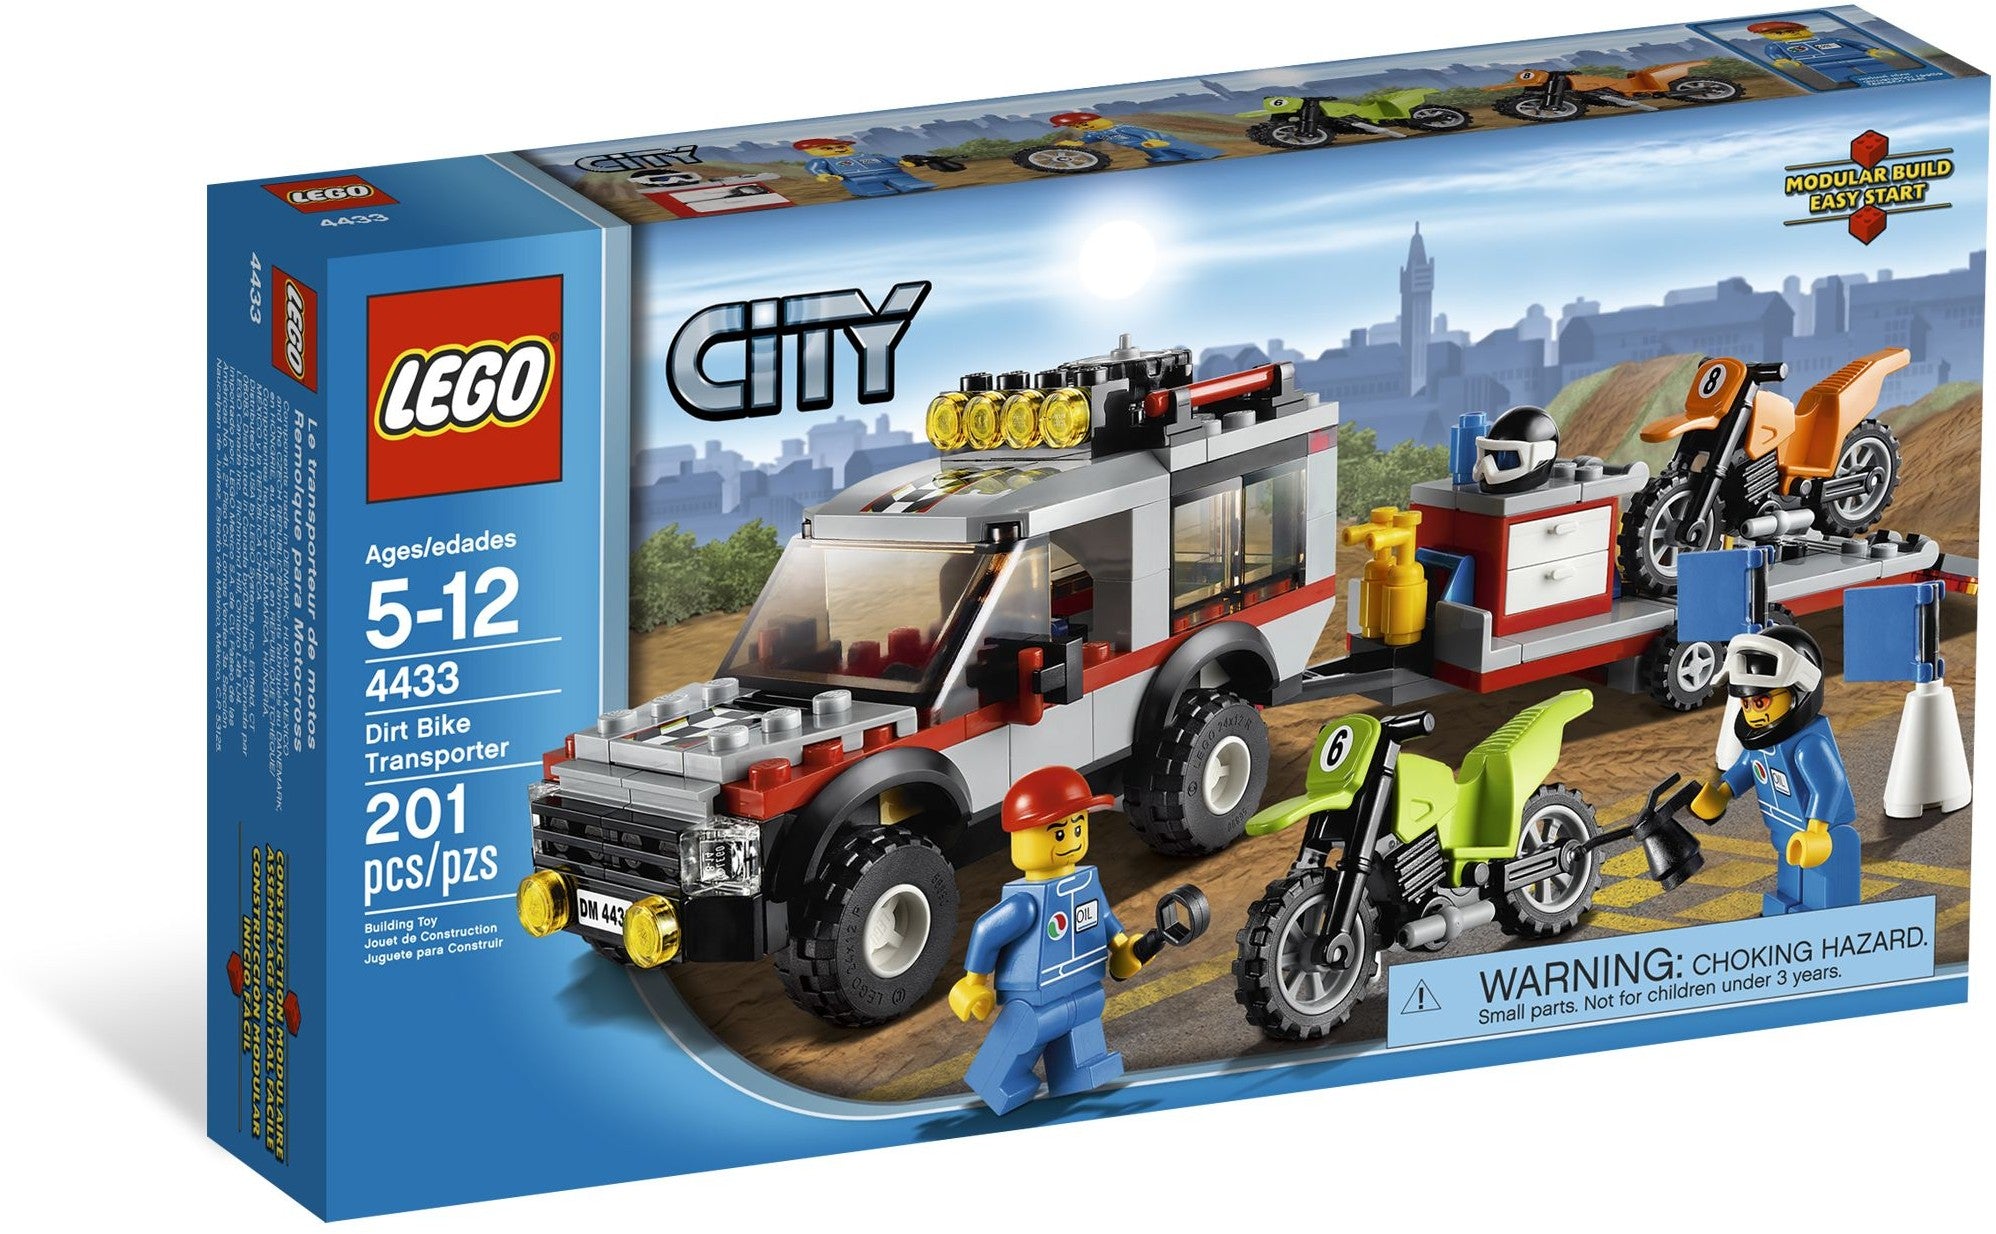 Lego City 4433 - Dirt Bike Transporter